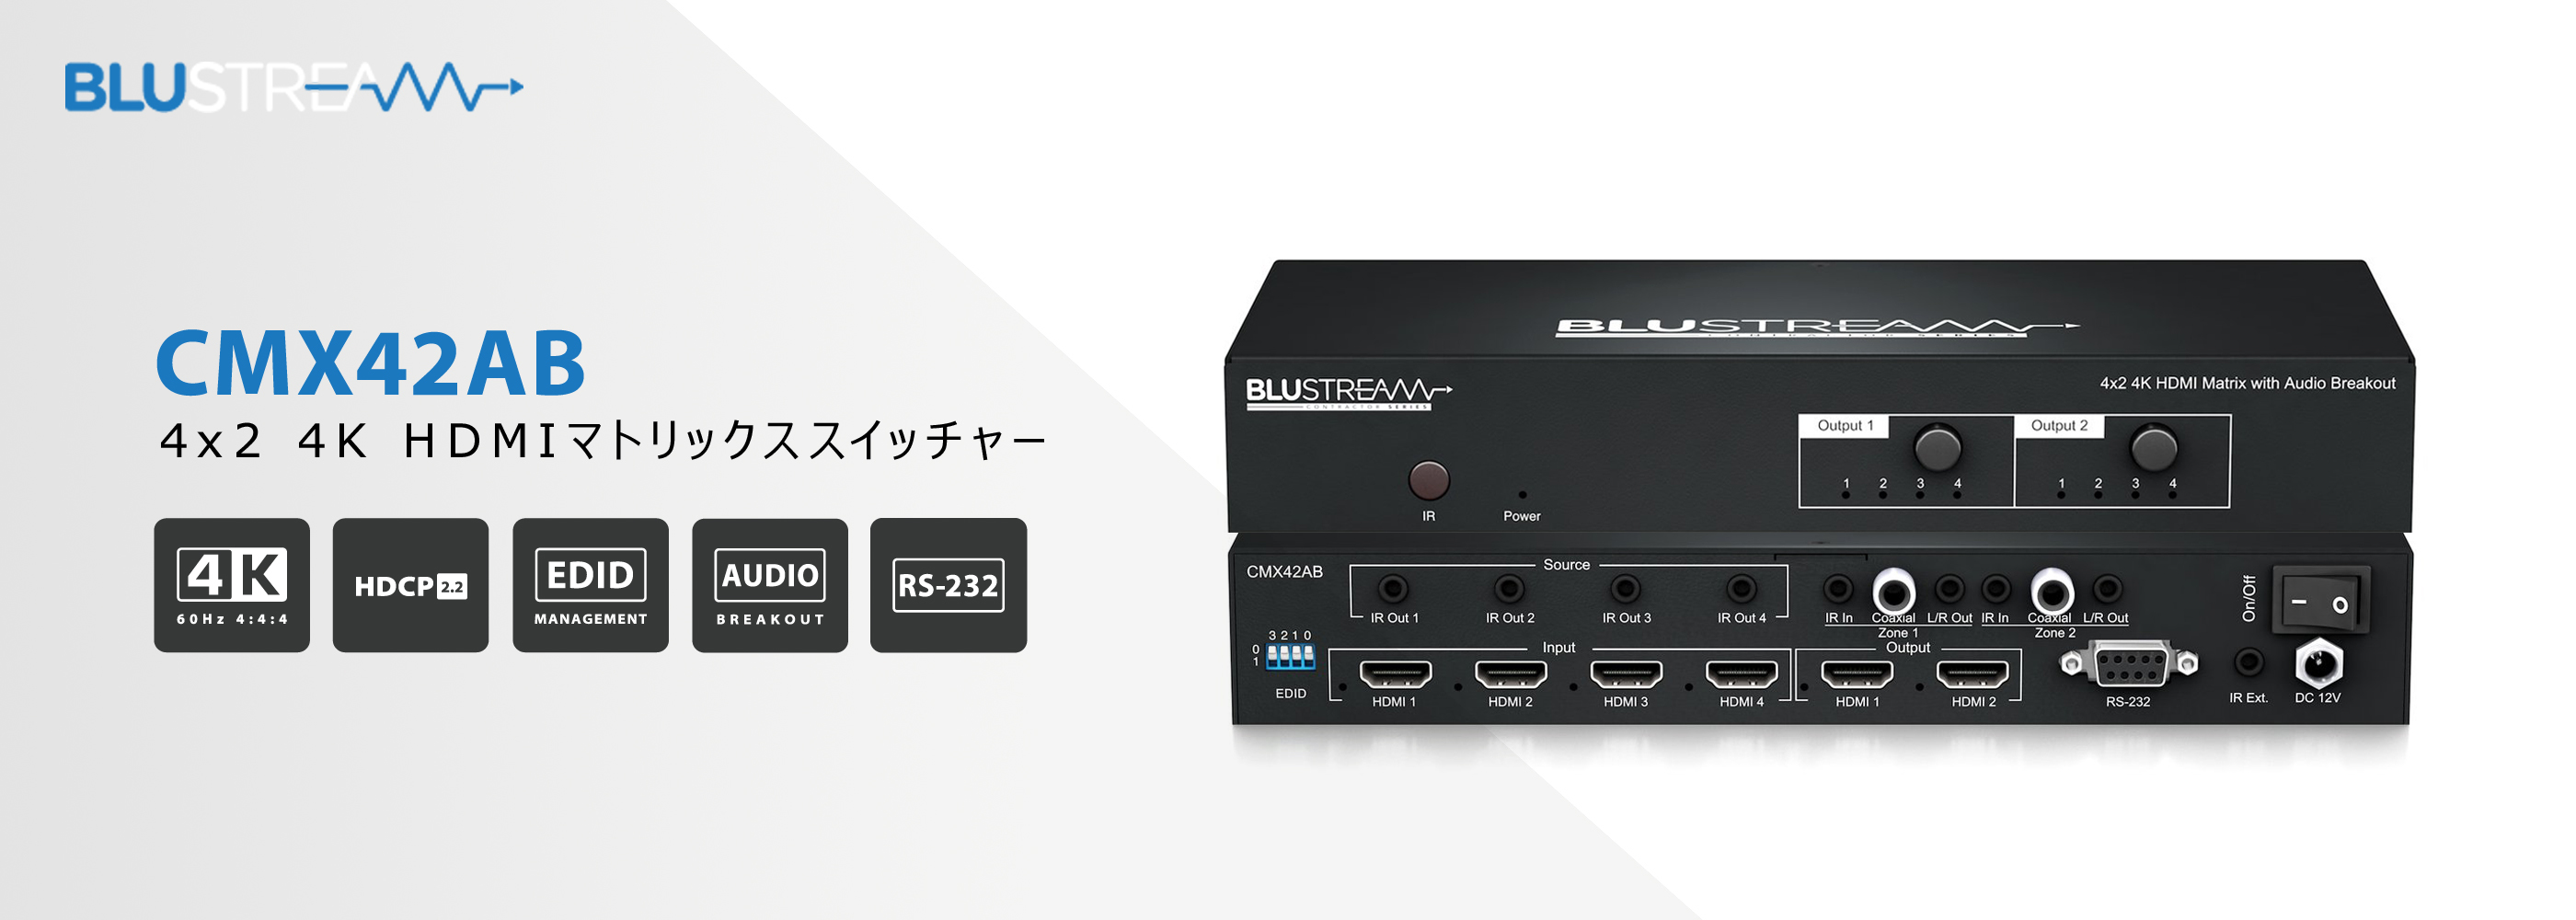 Blustream社製 CMX42AB 4x2 4K HDMIマトリックススイッチャーのご案内